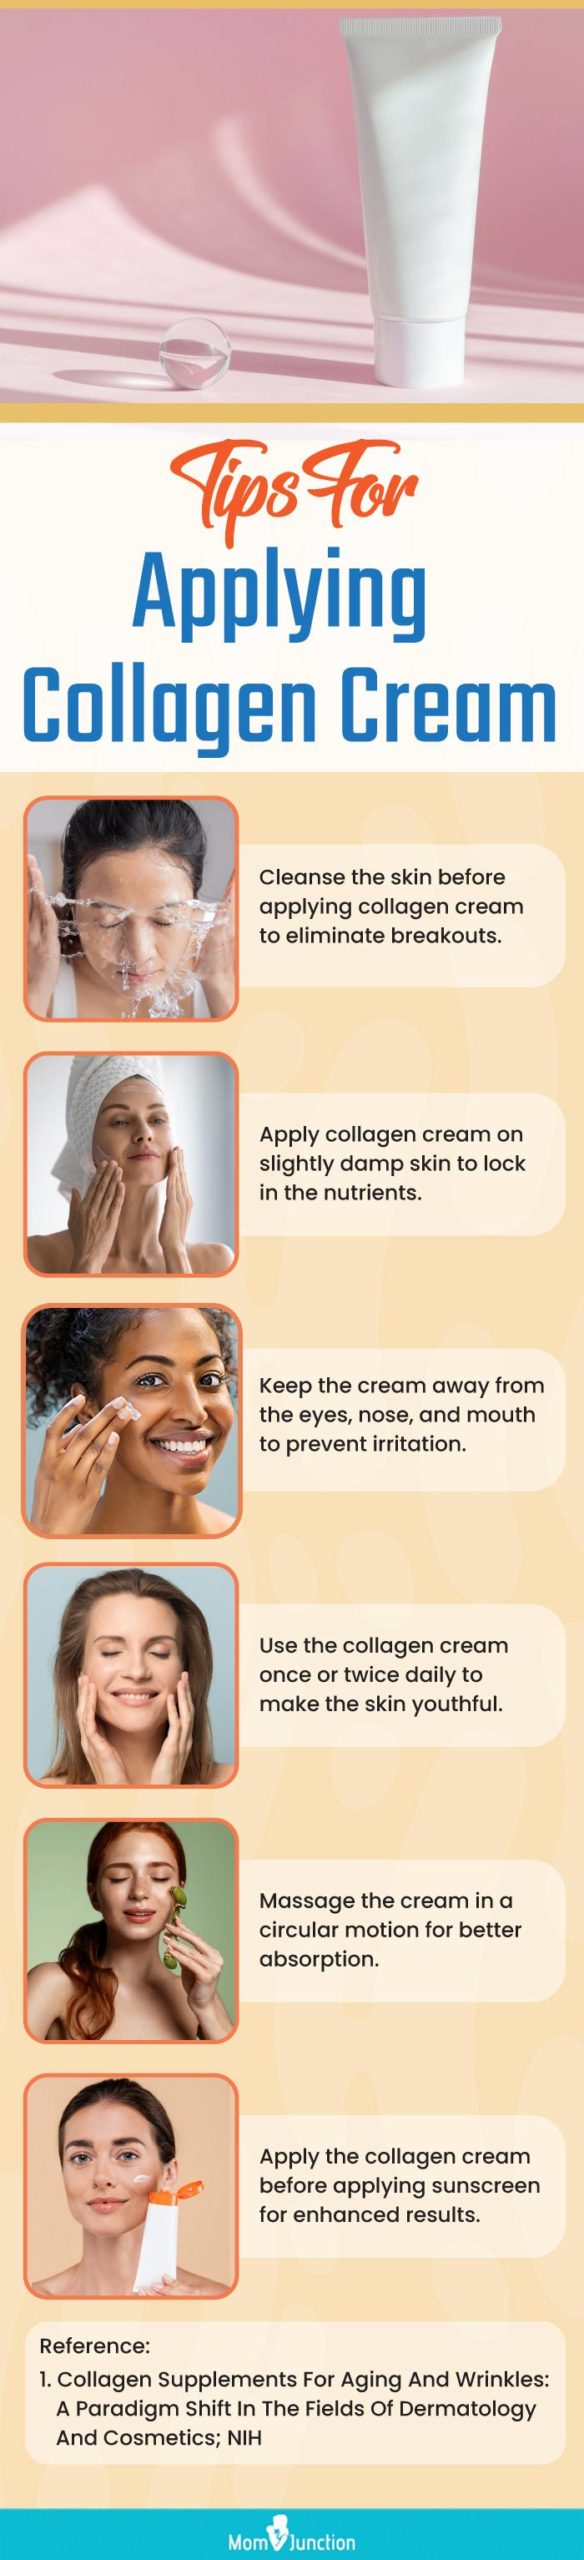 Tips For Applying Collagen Cream (infographic)